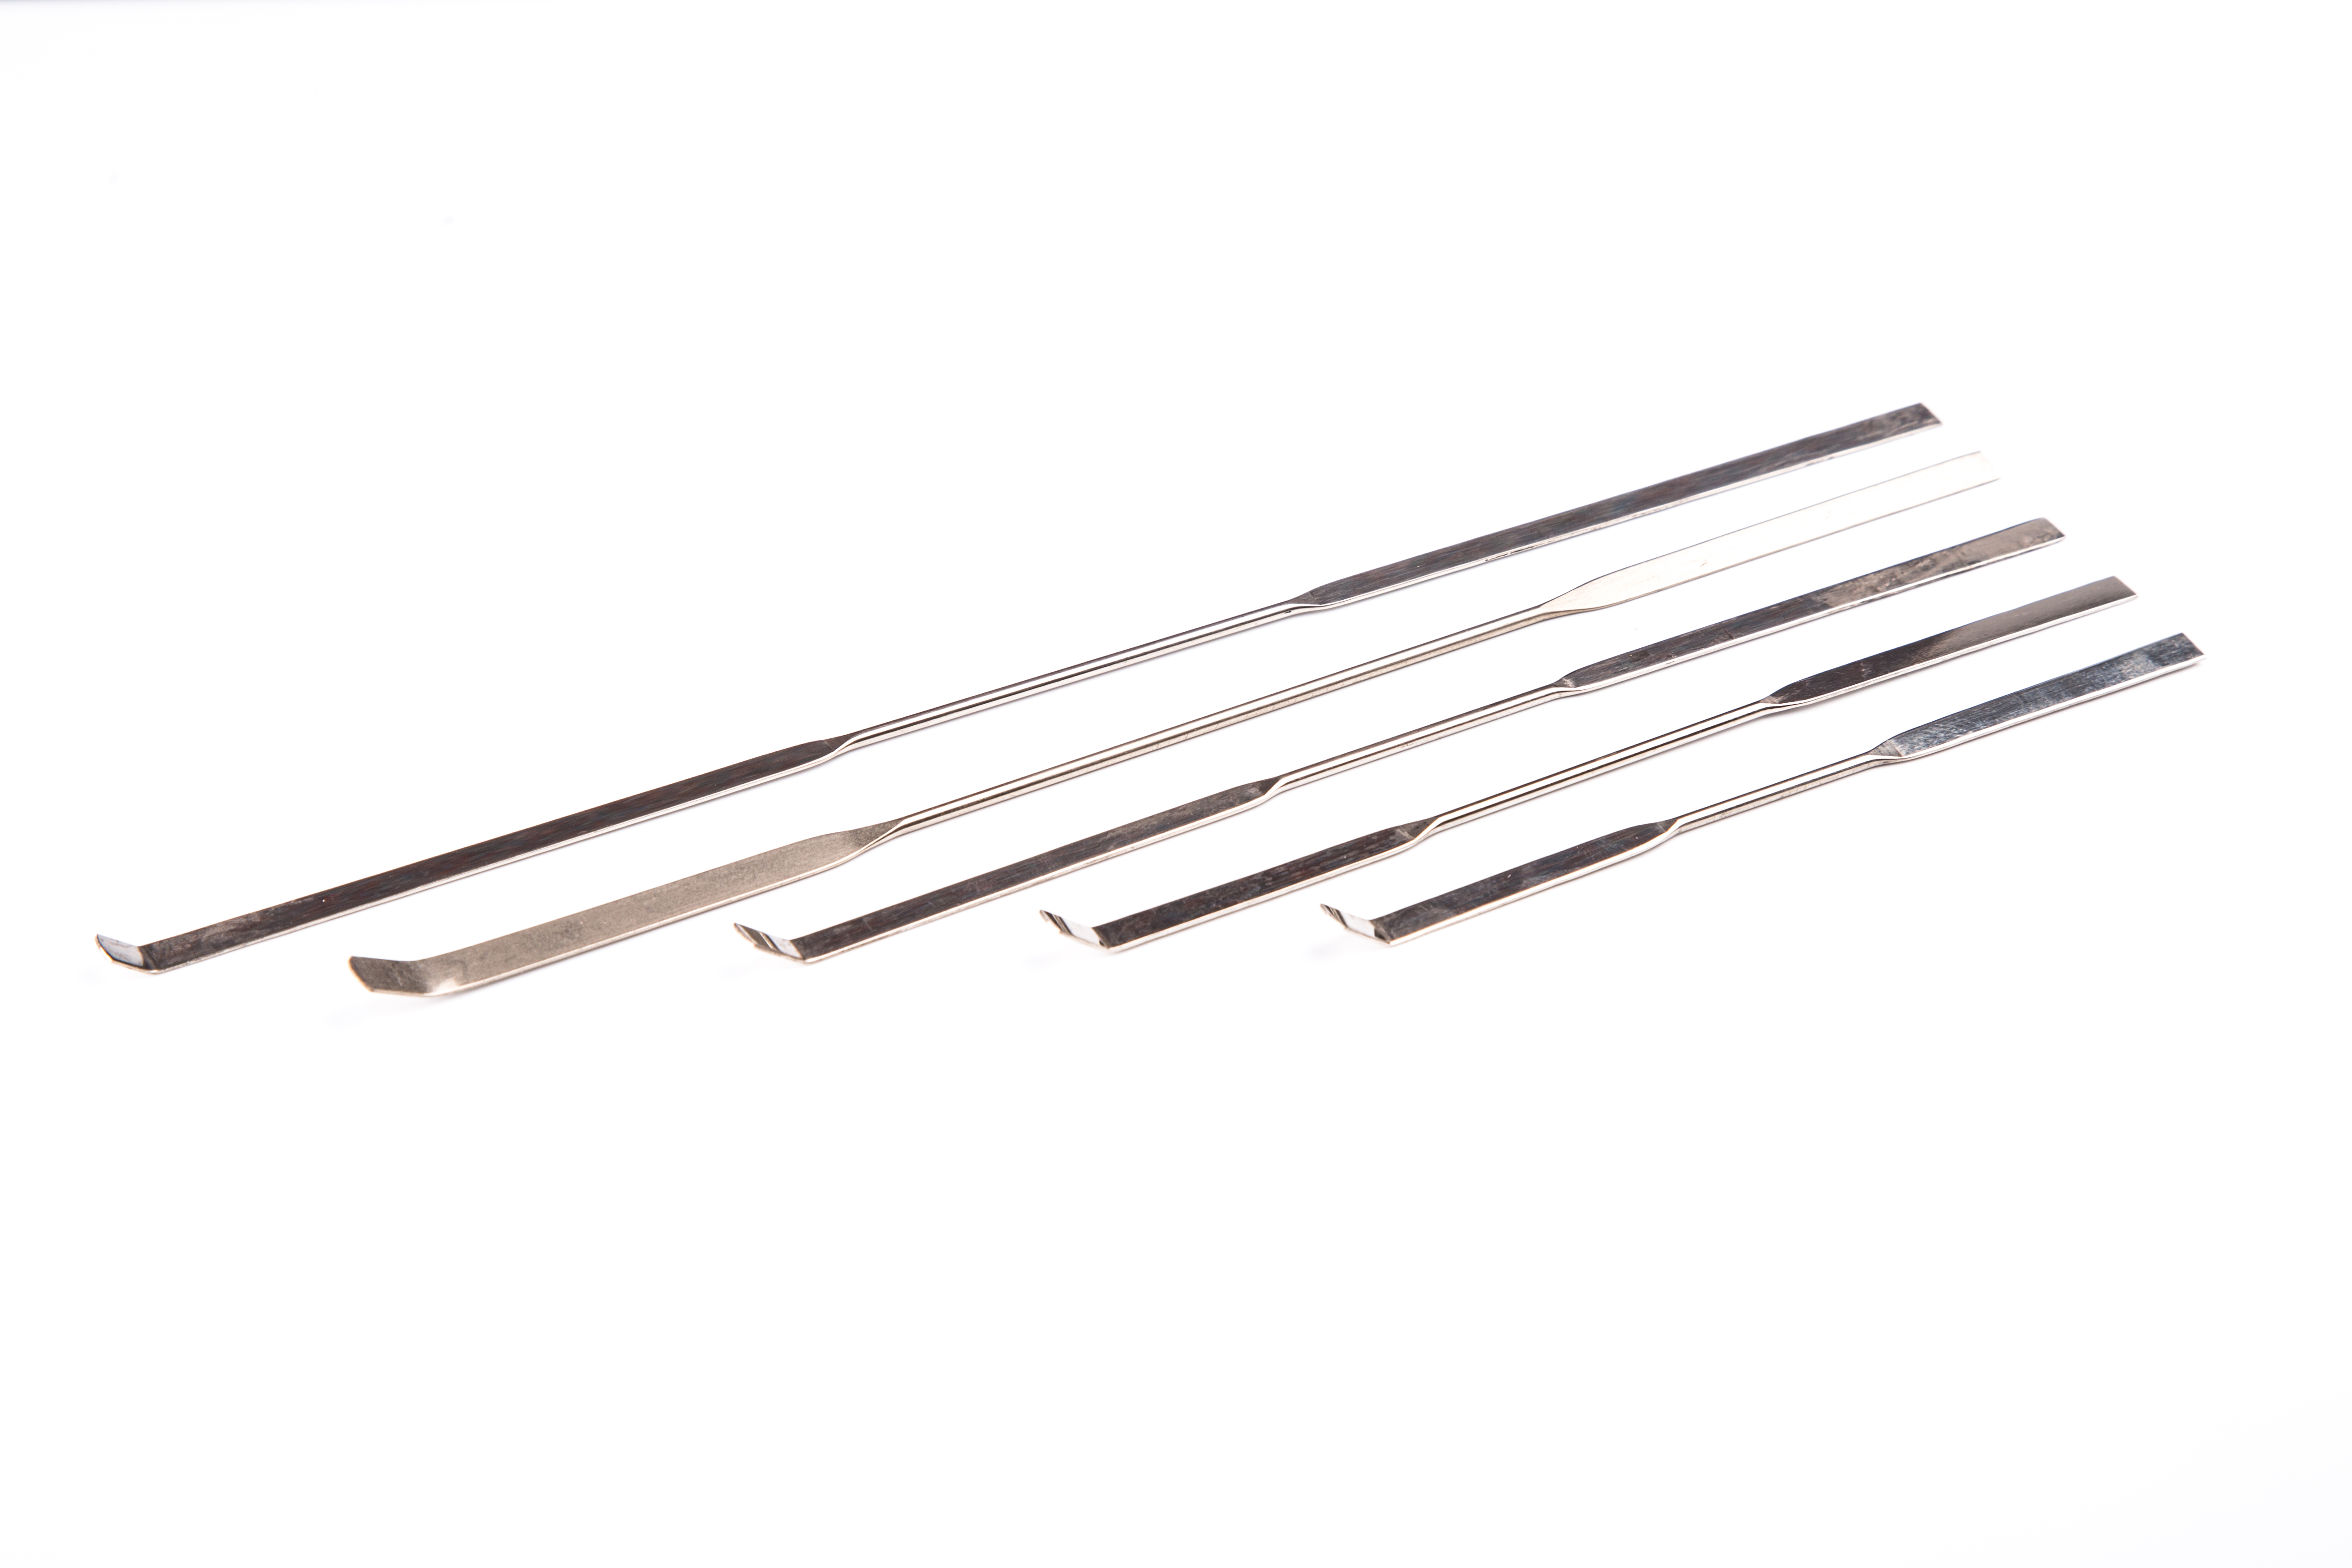 Stainless steel spatula, Chattaway pattern (Micro), 100mm